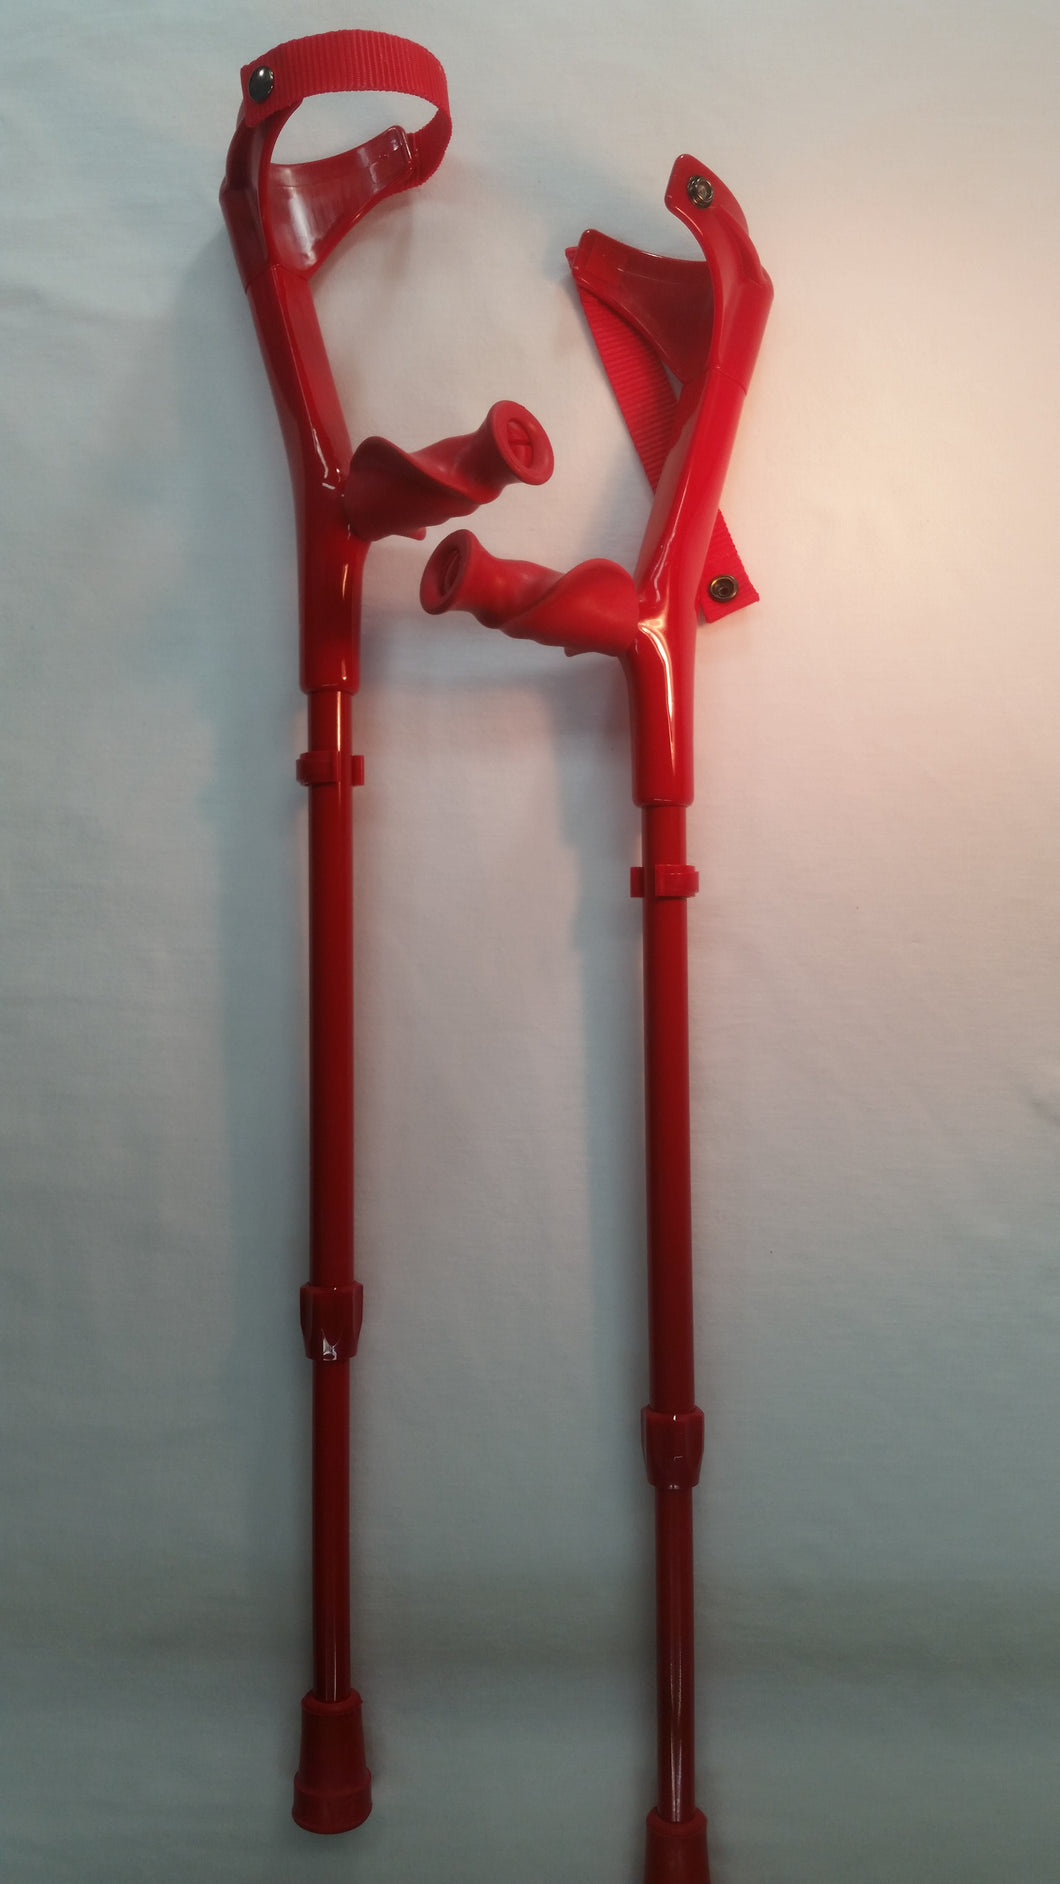 Kowsky Pediatric (Children's) Forearm crutches - w/ Soft Anatomic Handgrips